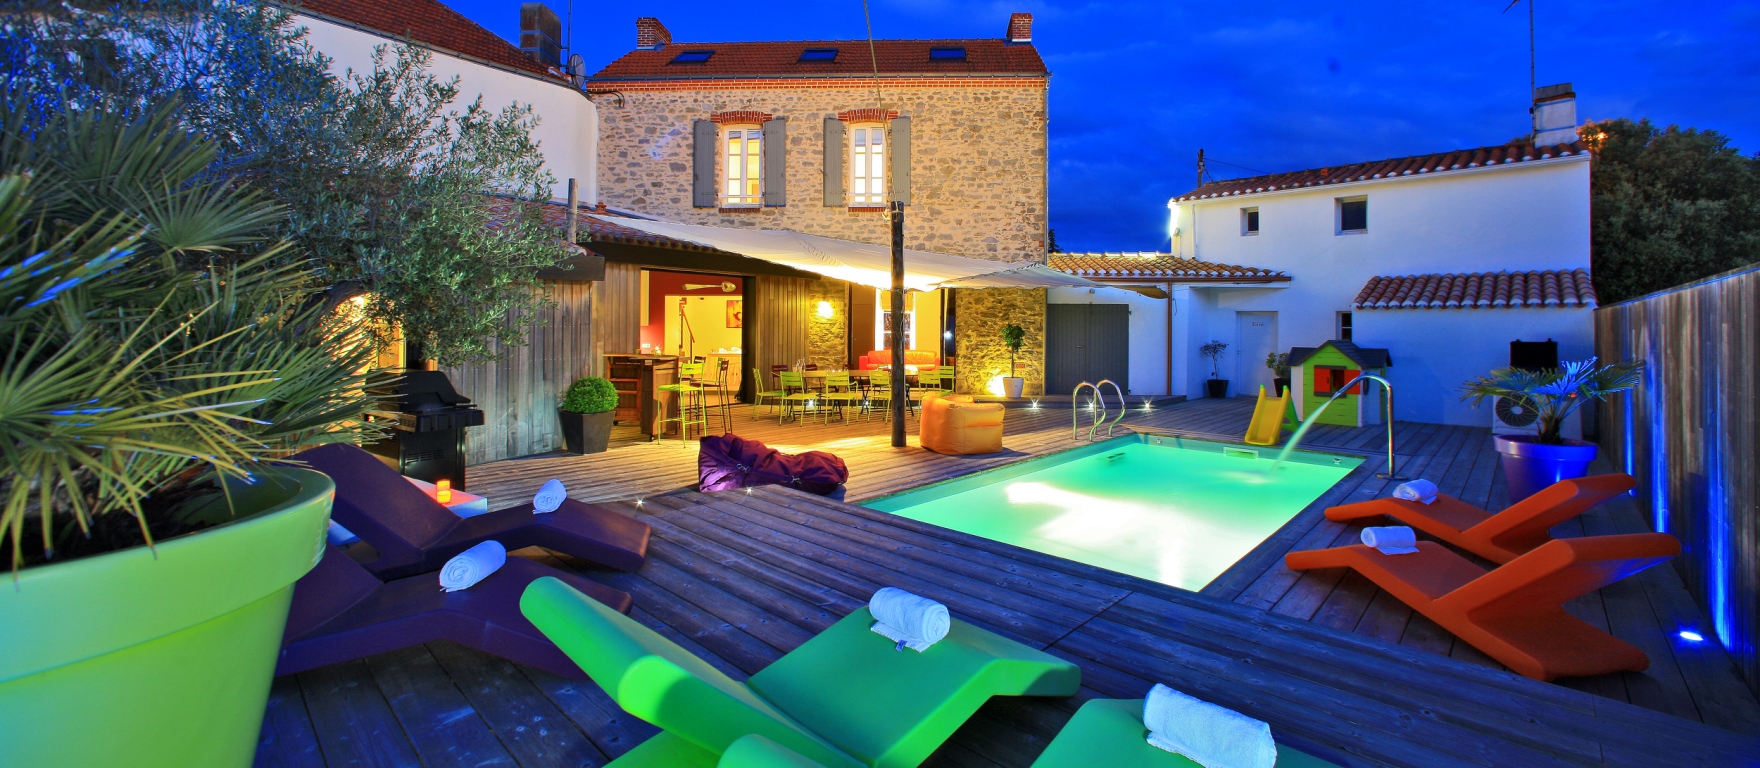 villa de luxe avec piscine Noirmoutier